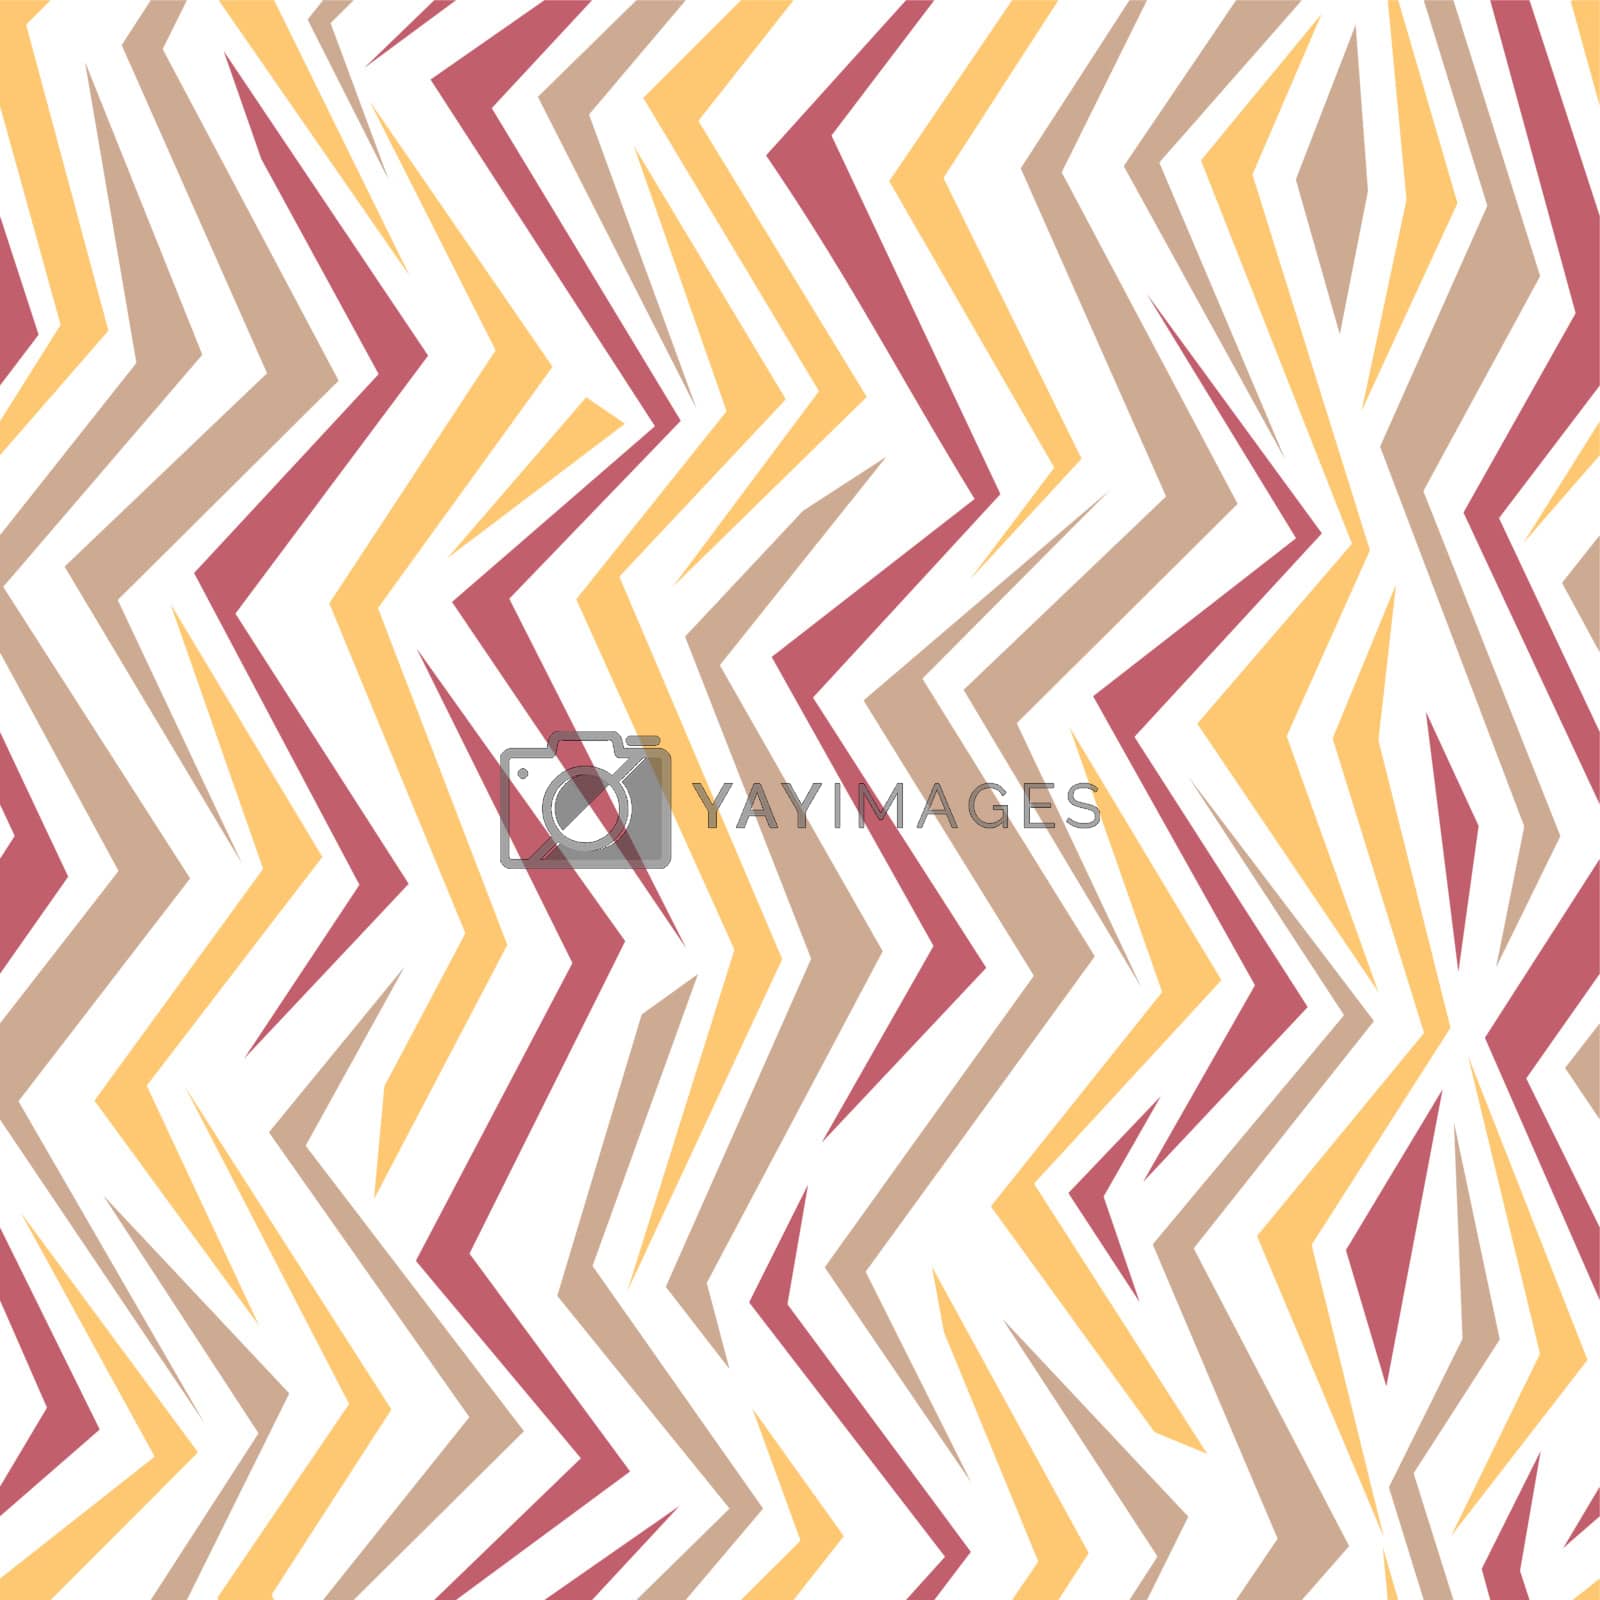 Royalty free image of decorative seamless pattern by SelenaMay